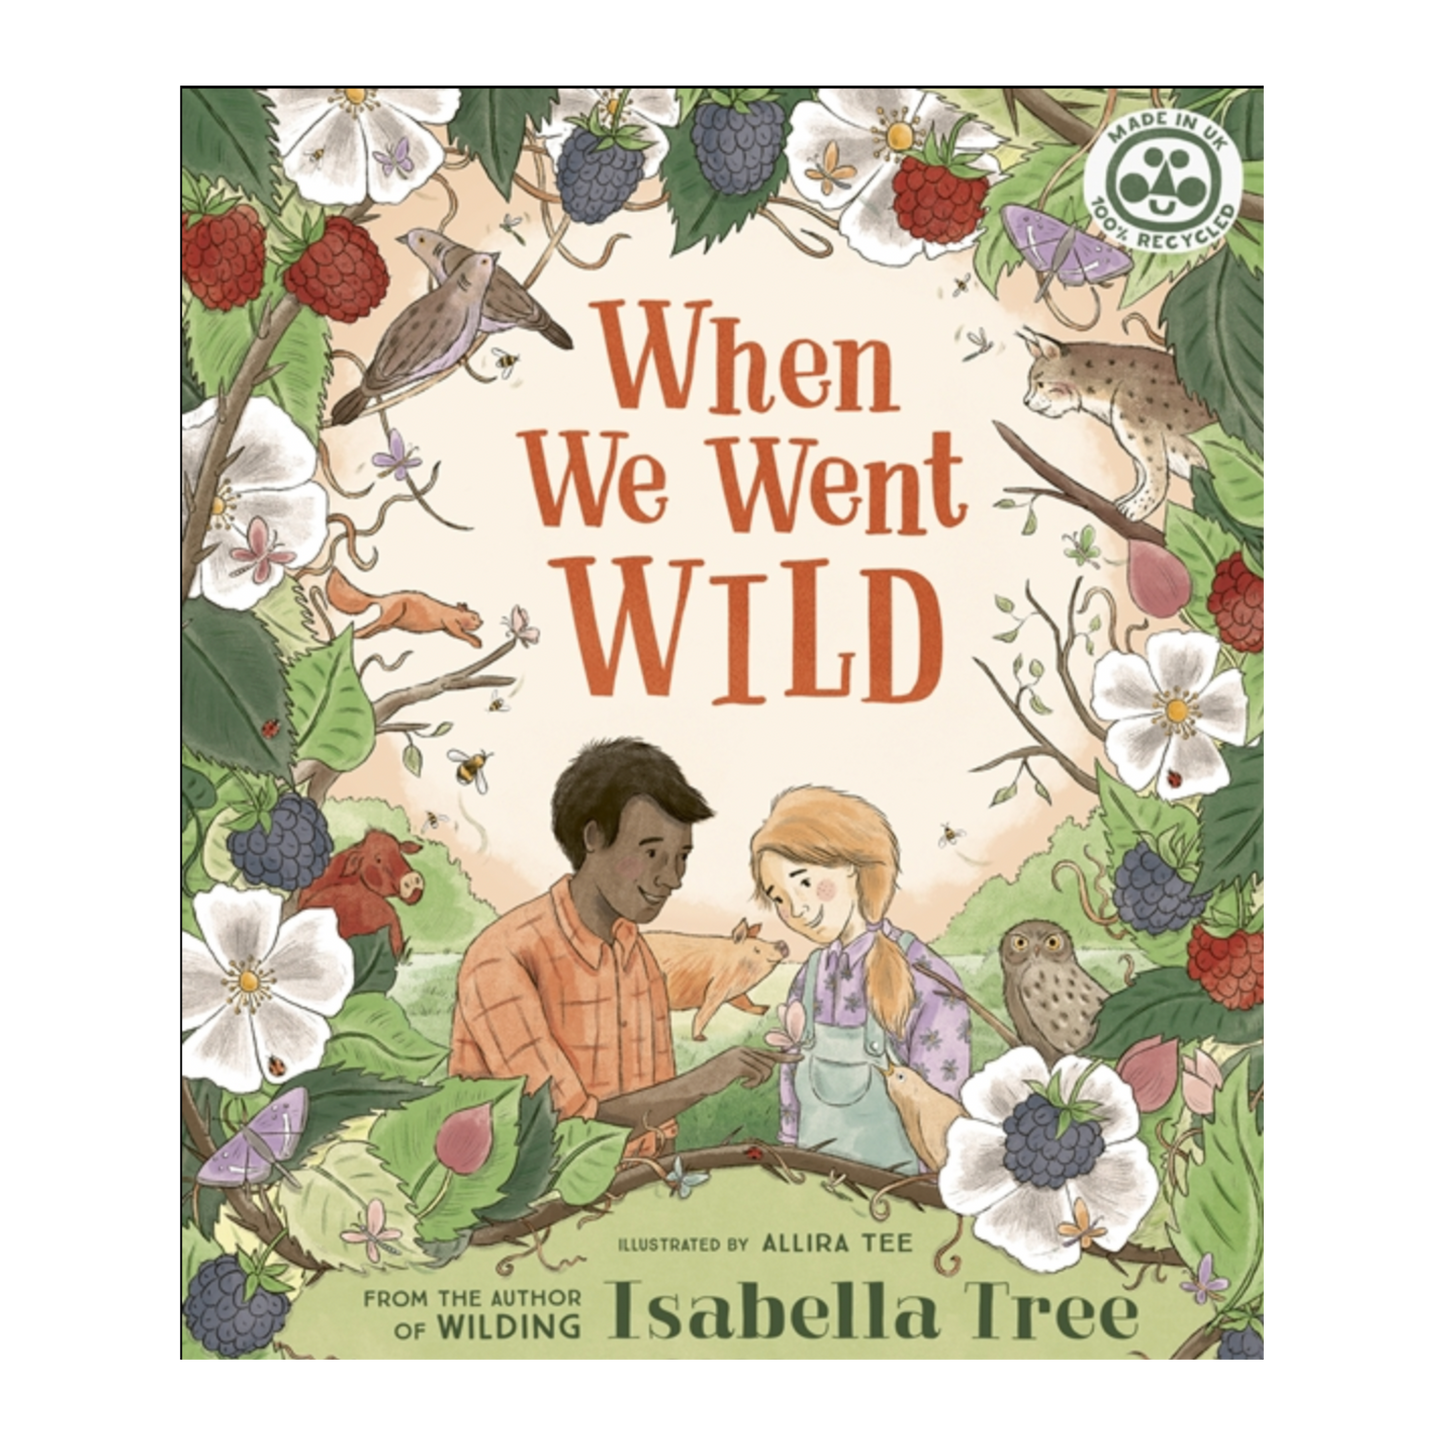 When We Went Wild by Isabella Tree